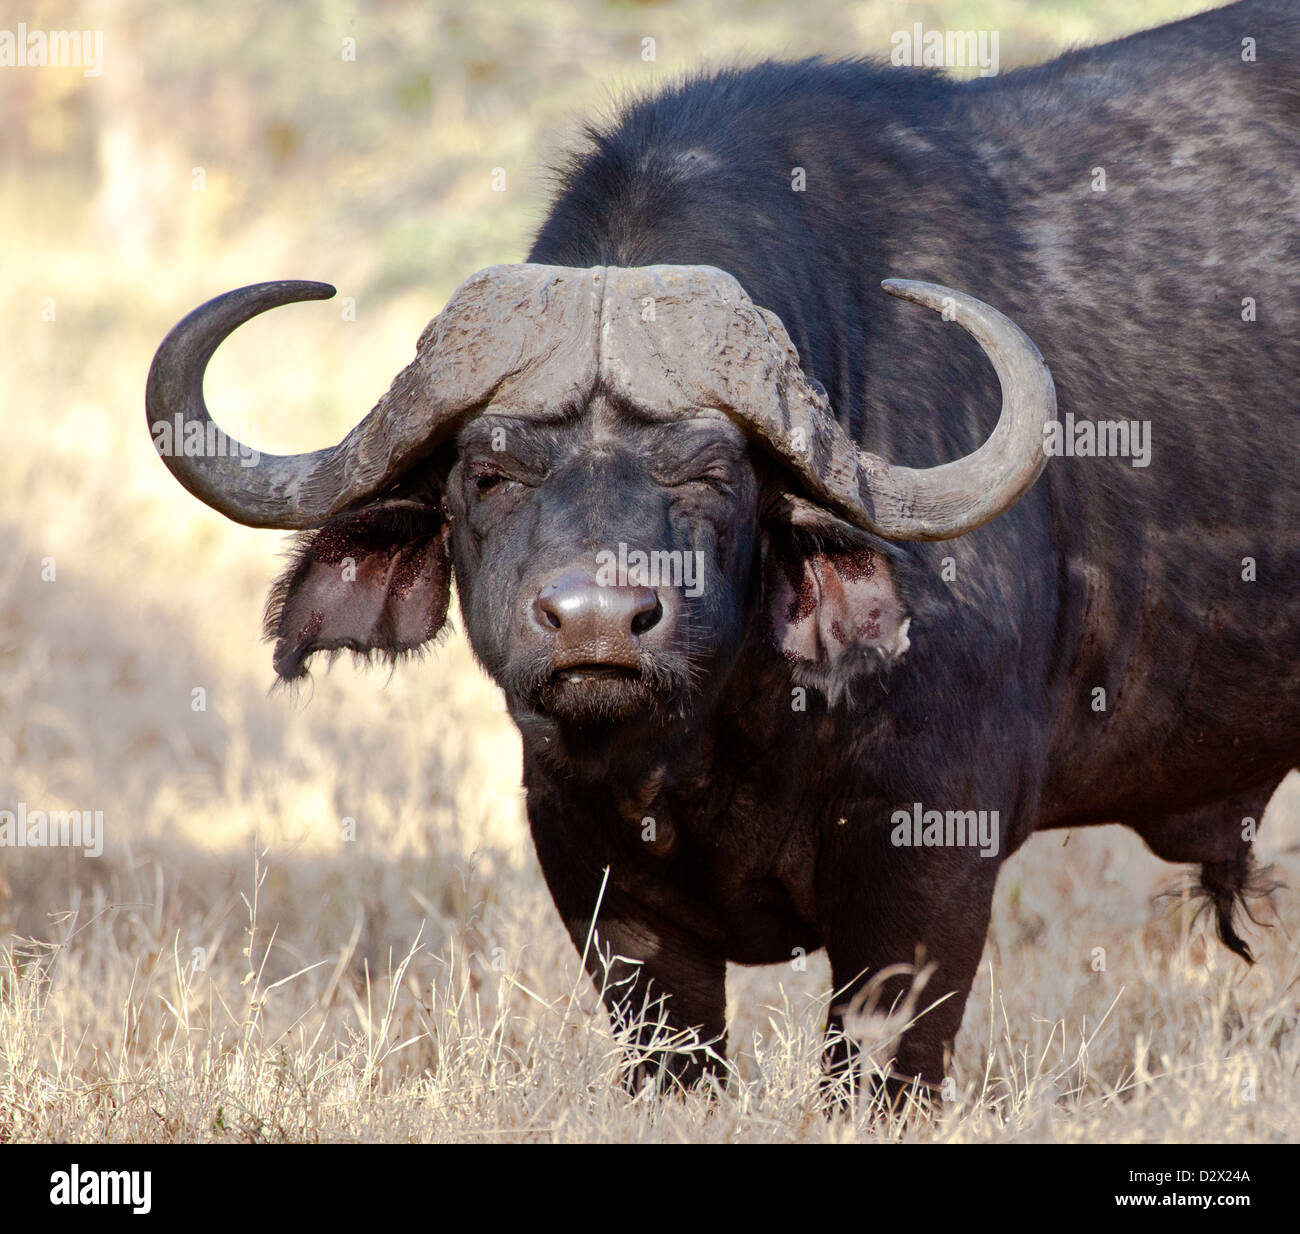 One of the'Big 5' the cape buffalo in the Serengeti. Serengeti National Park, Tanzania. Stock Photo